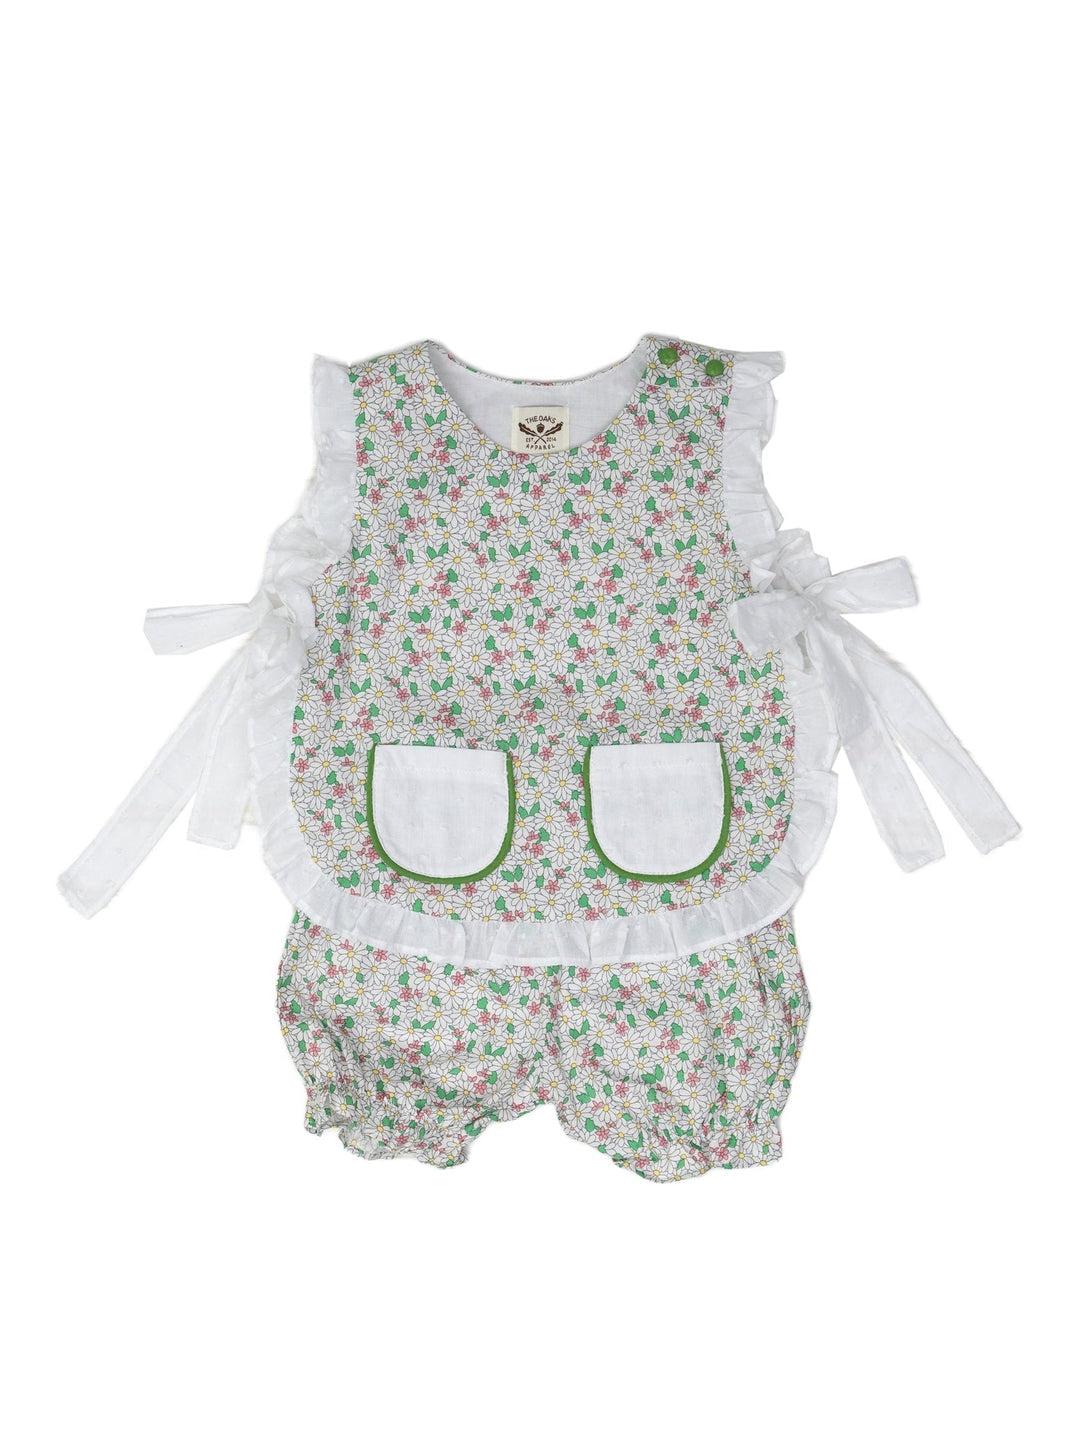 Green/White Floral Baby & Toddler Bloomer Set